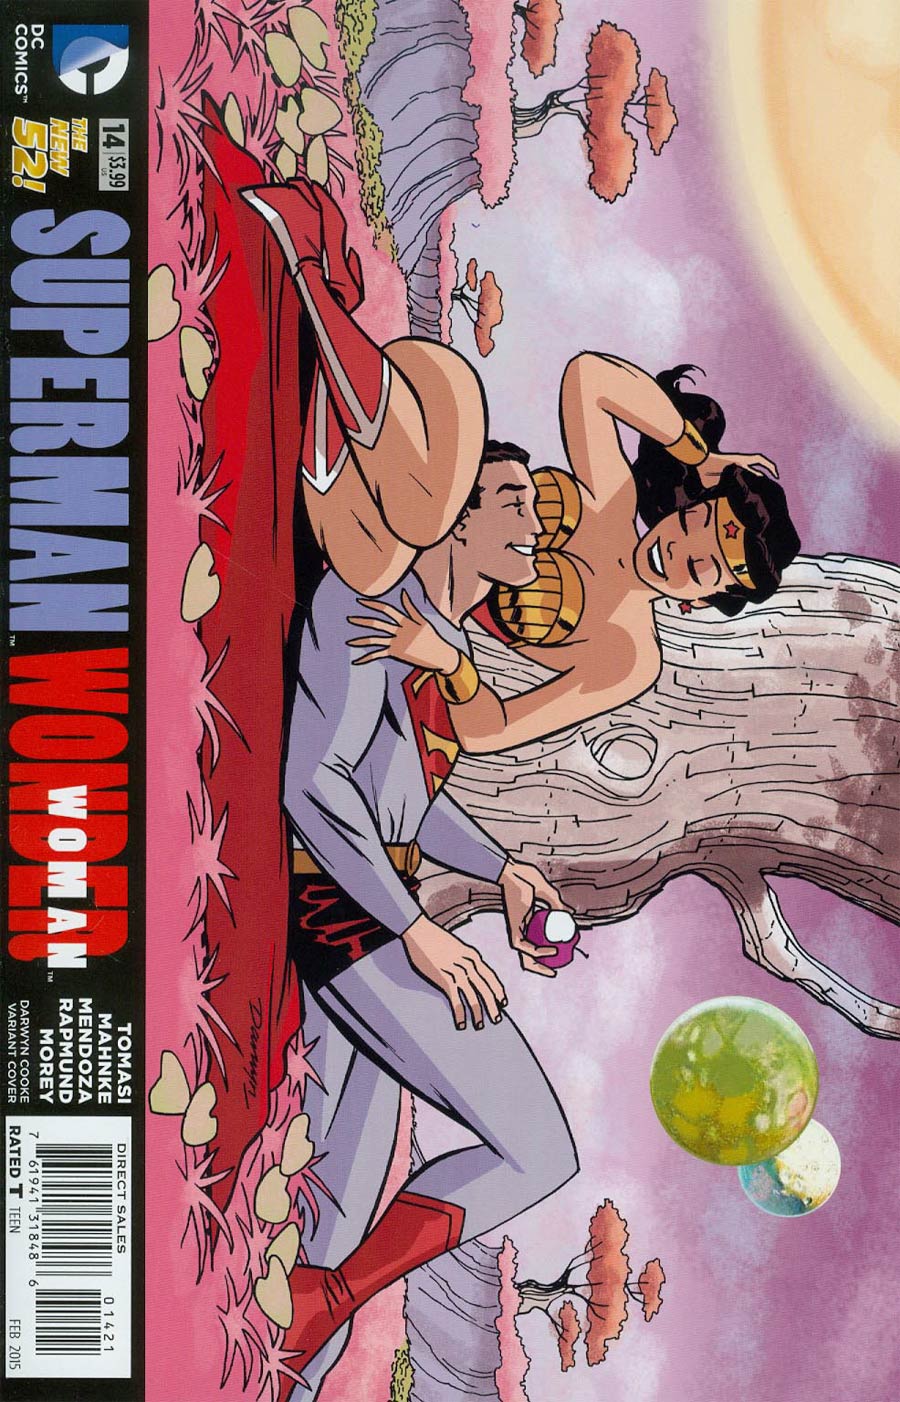 Superman/Wonder Woman #14